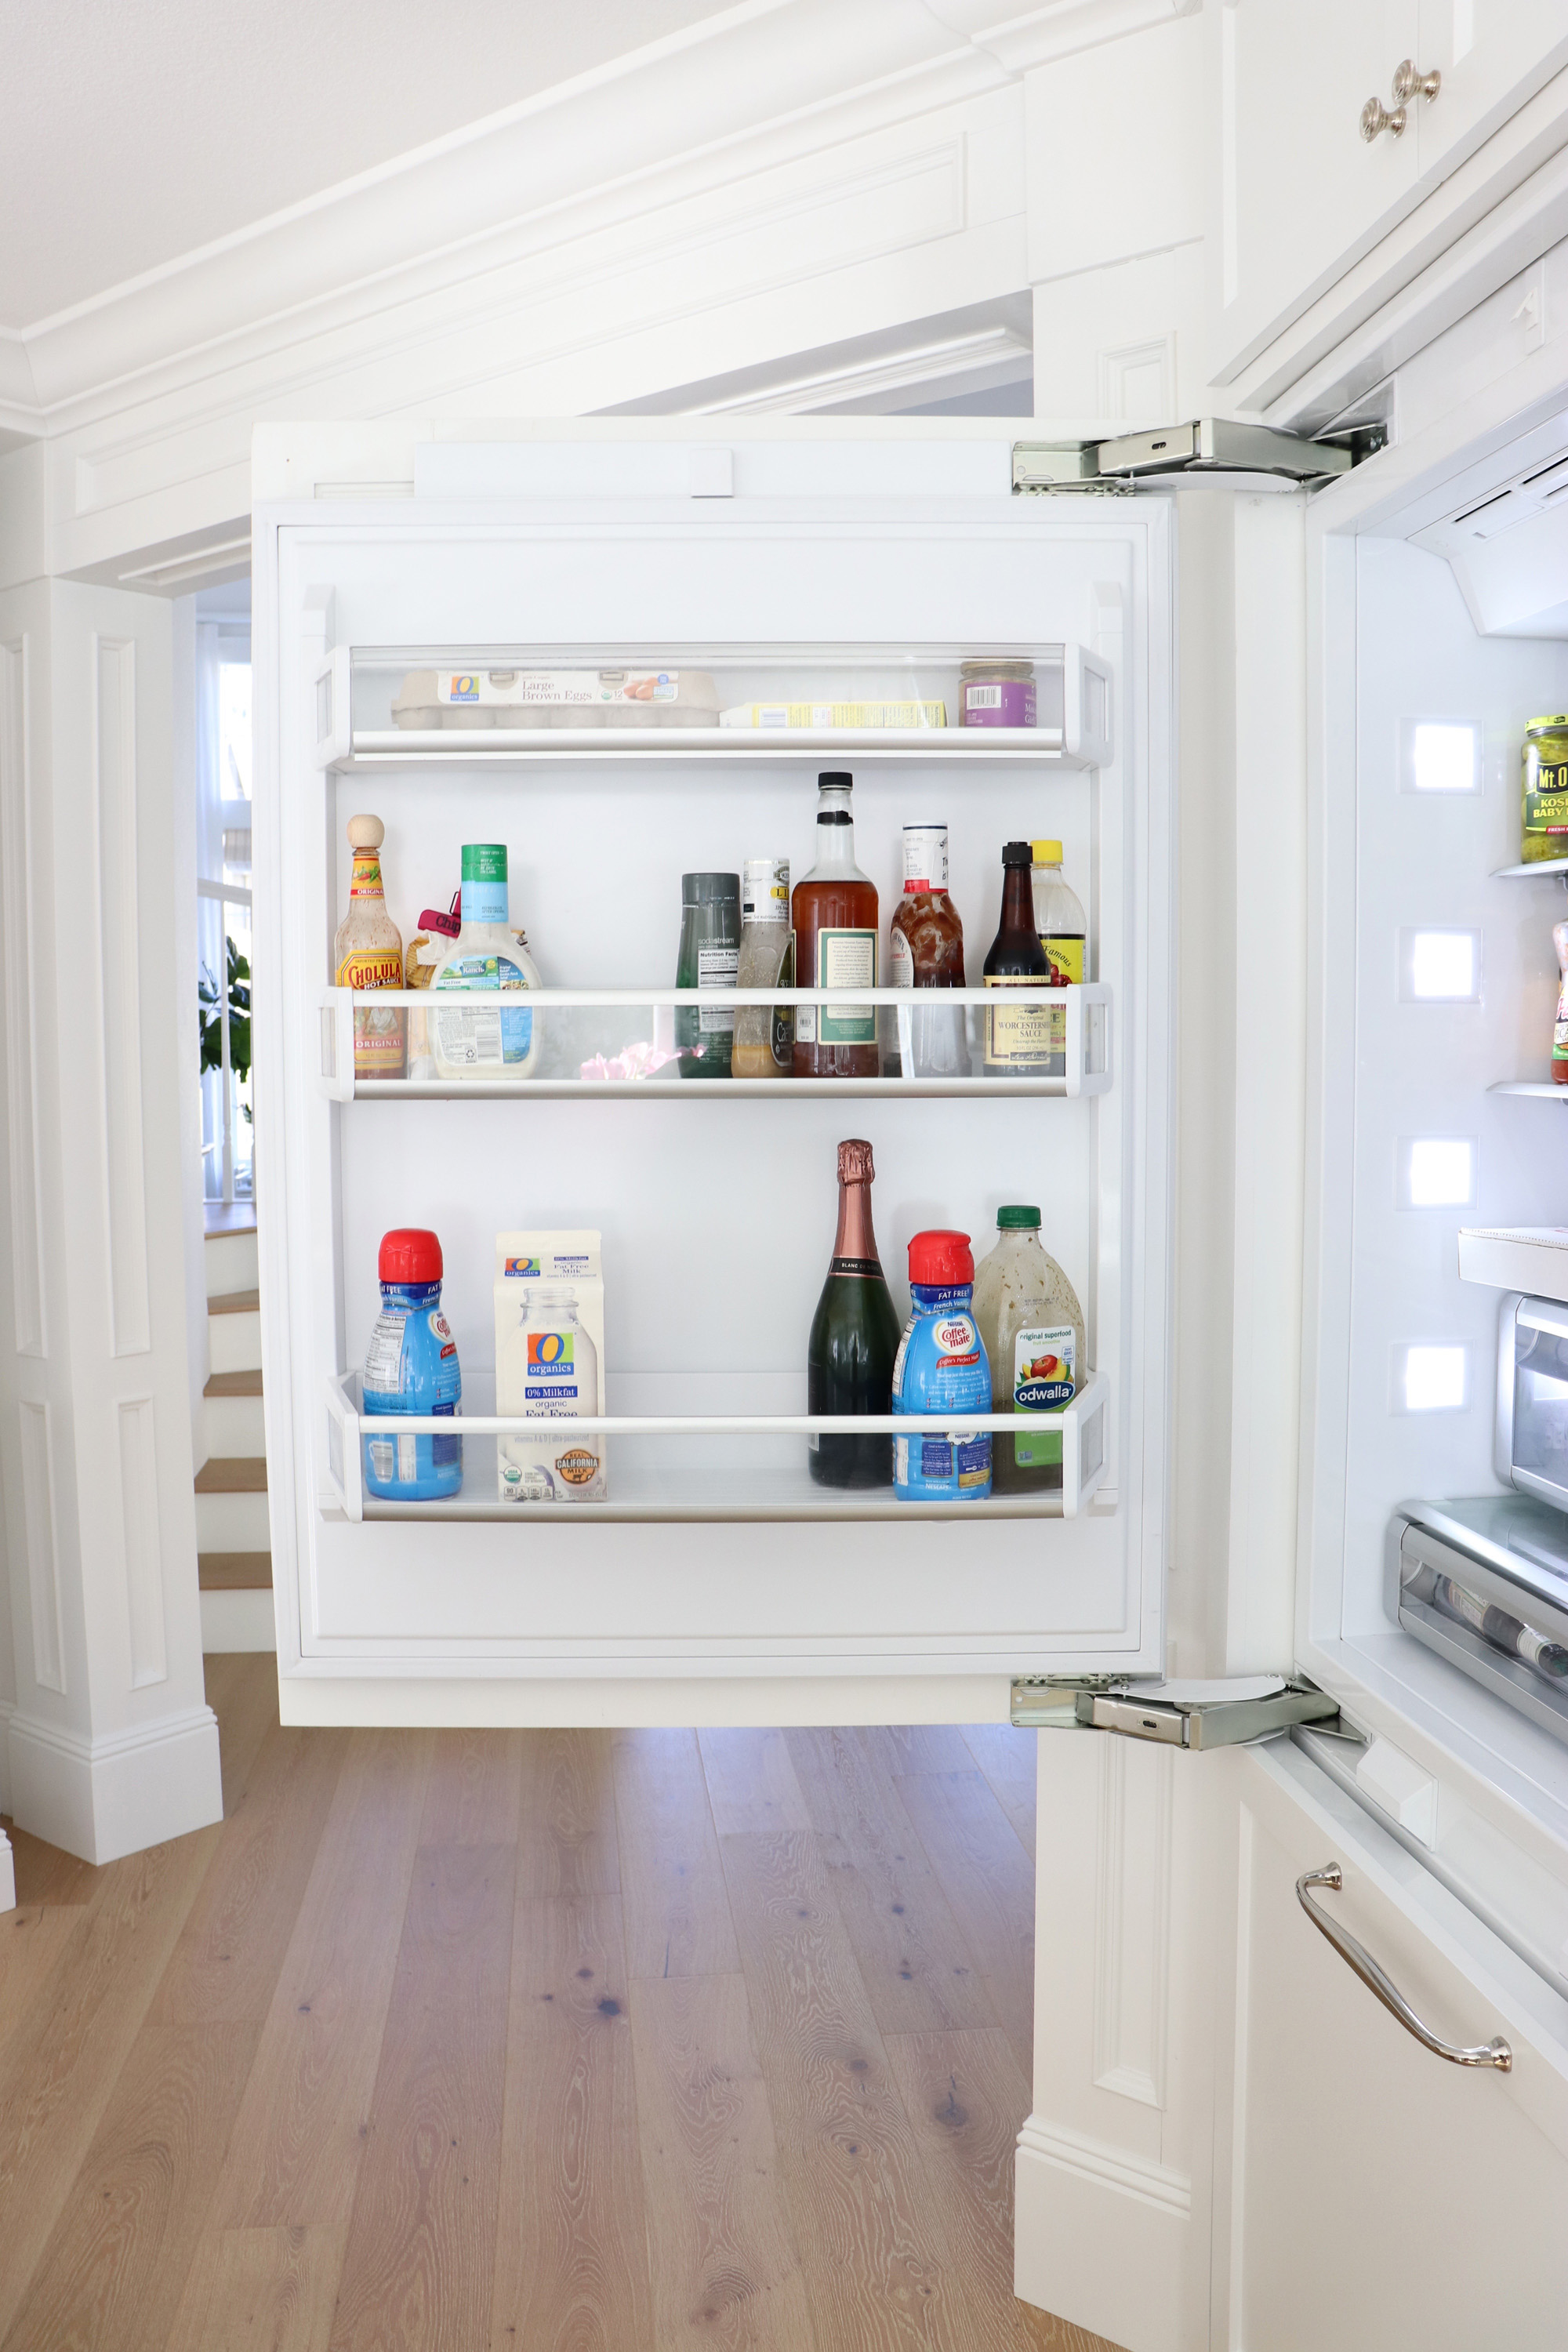 10 Tips To Organize Your Refrigerator | Kristy Wicks.